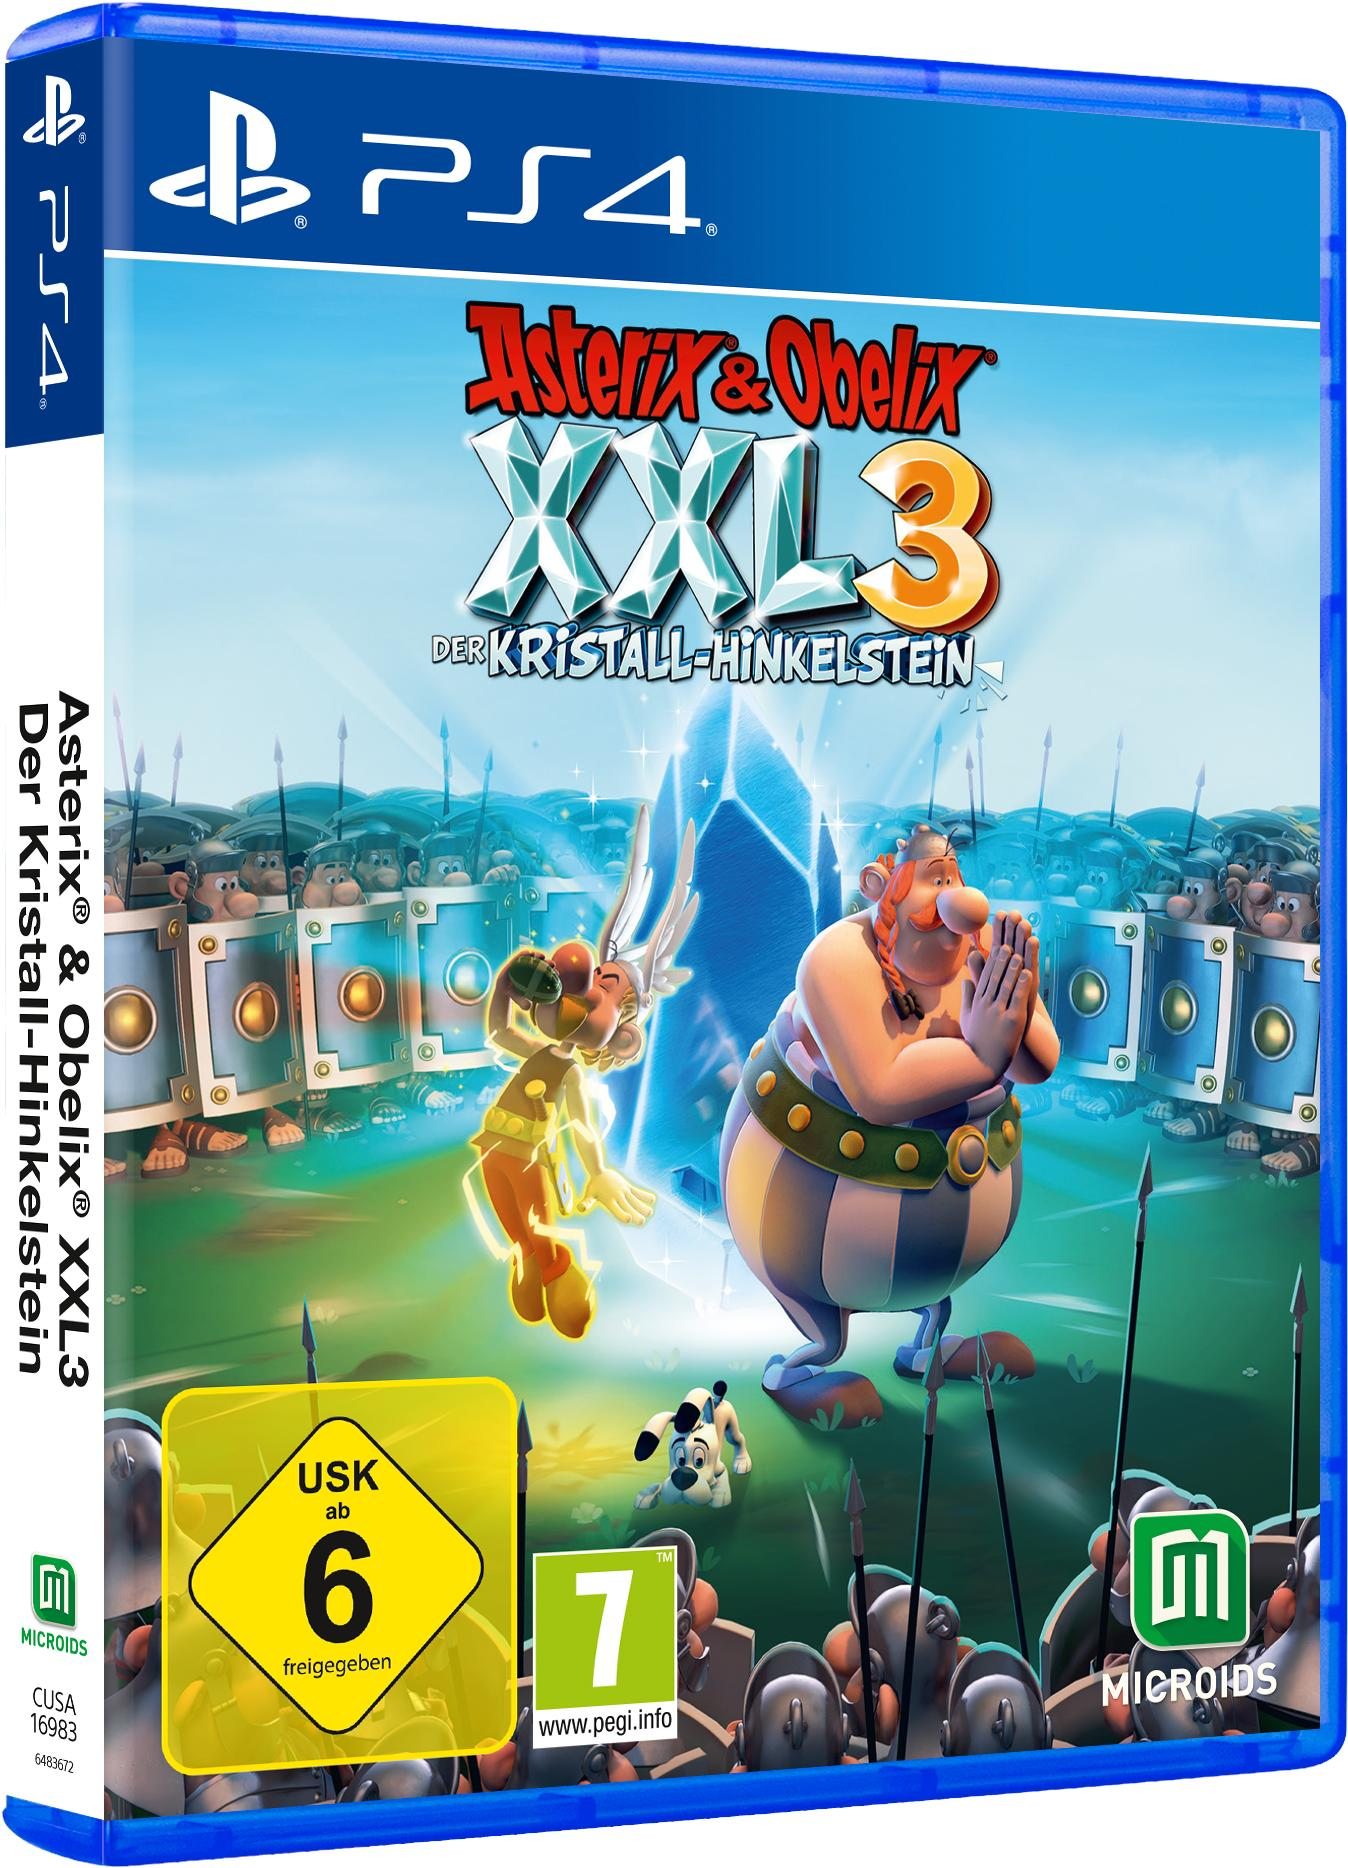 Asterix & Obelix [PlayStation Kristall-Hinkelstein 4] Der - XXL3